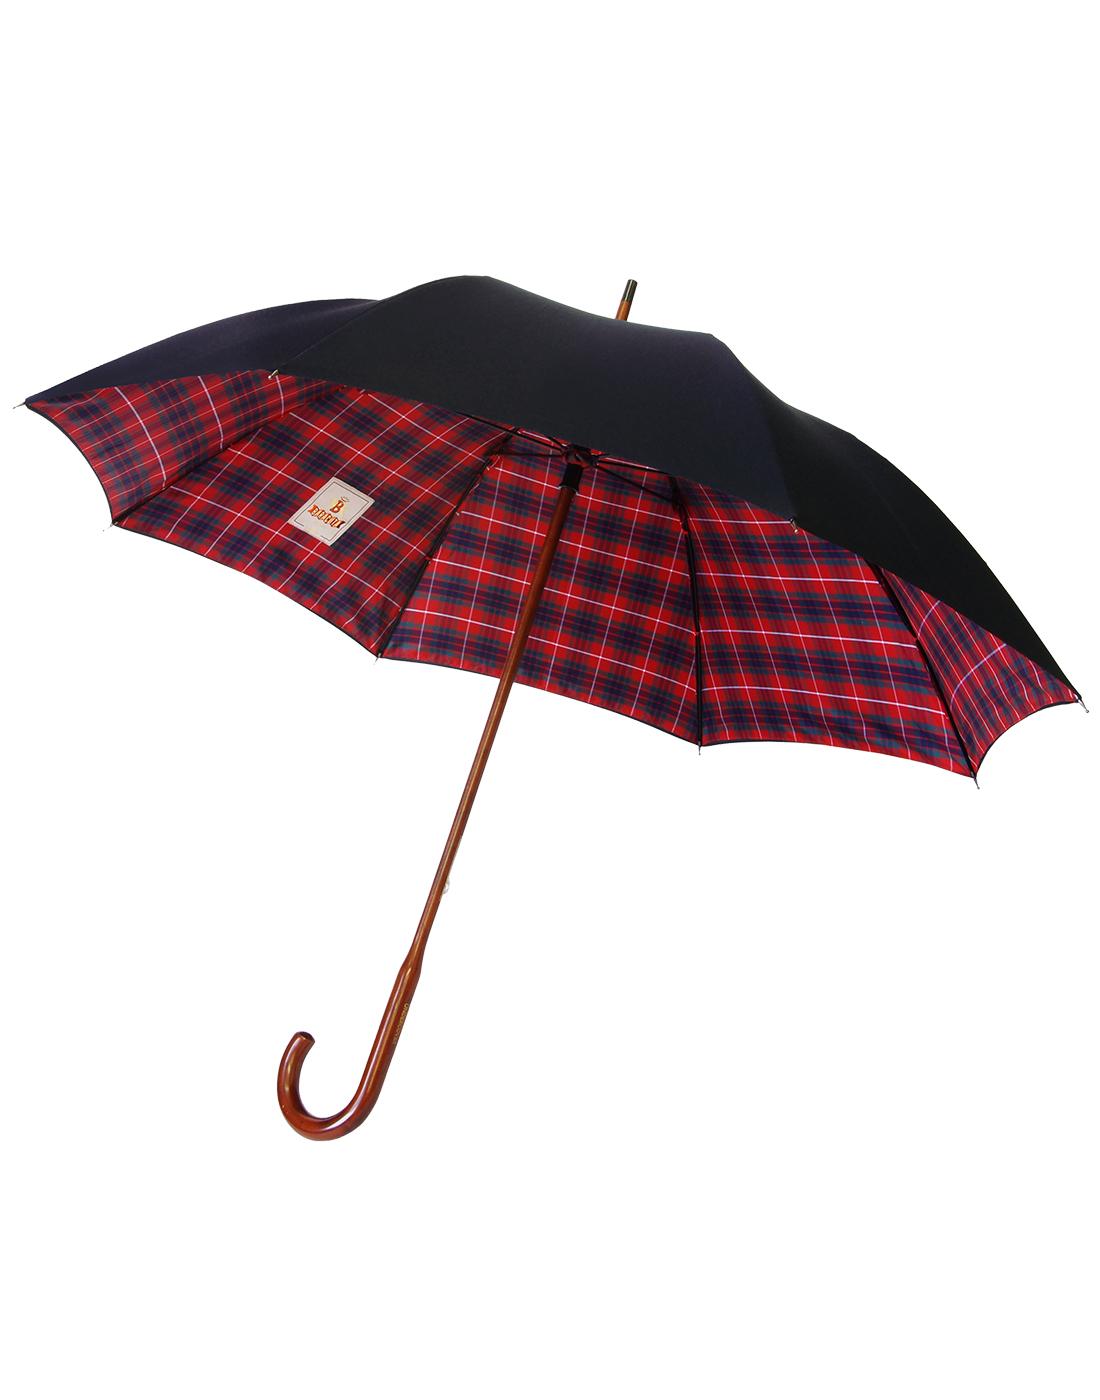 BARACUTA x LONDON UNDERCOVER Classic Umbrella